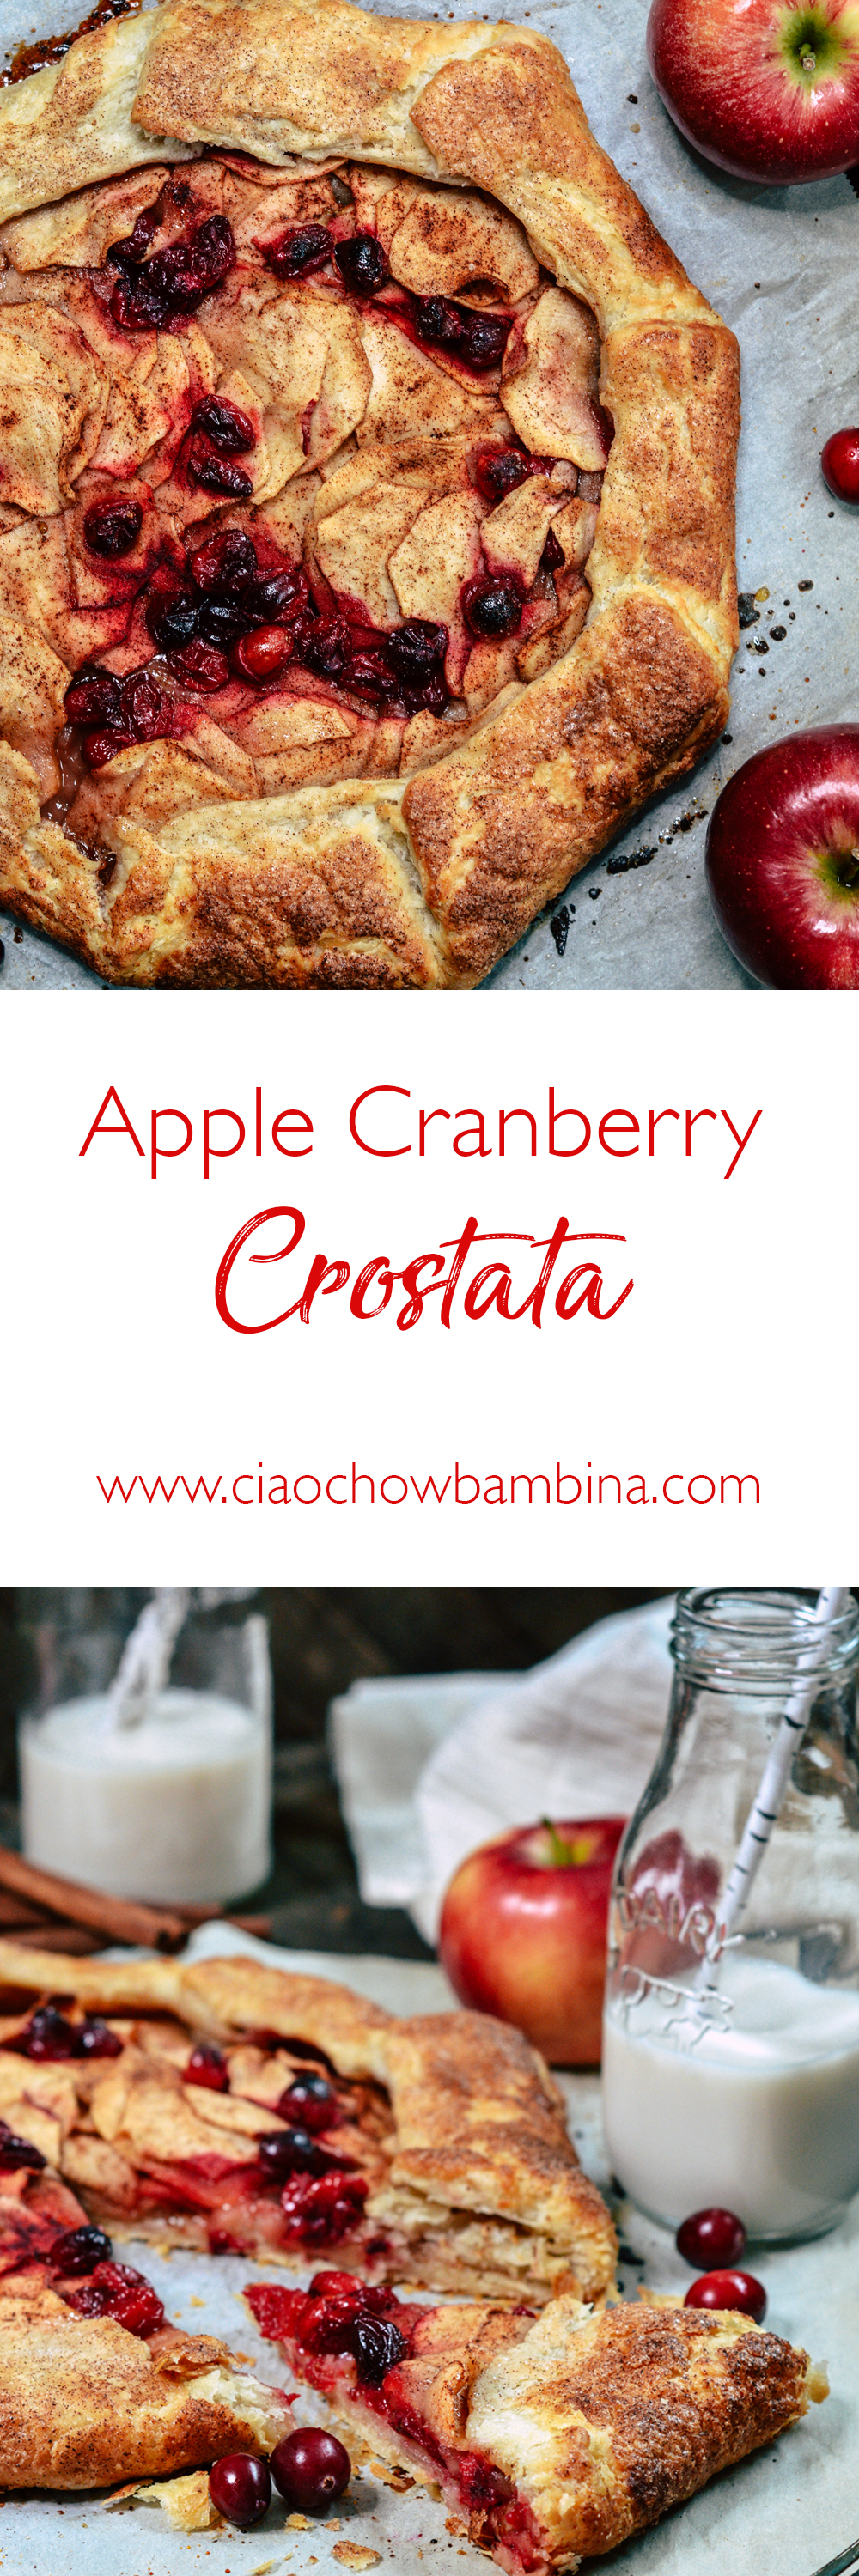 Apple Cranberry Crostata ciaochowbambina.com